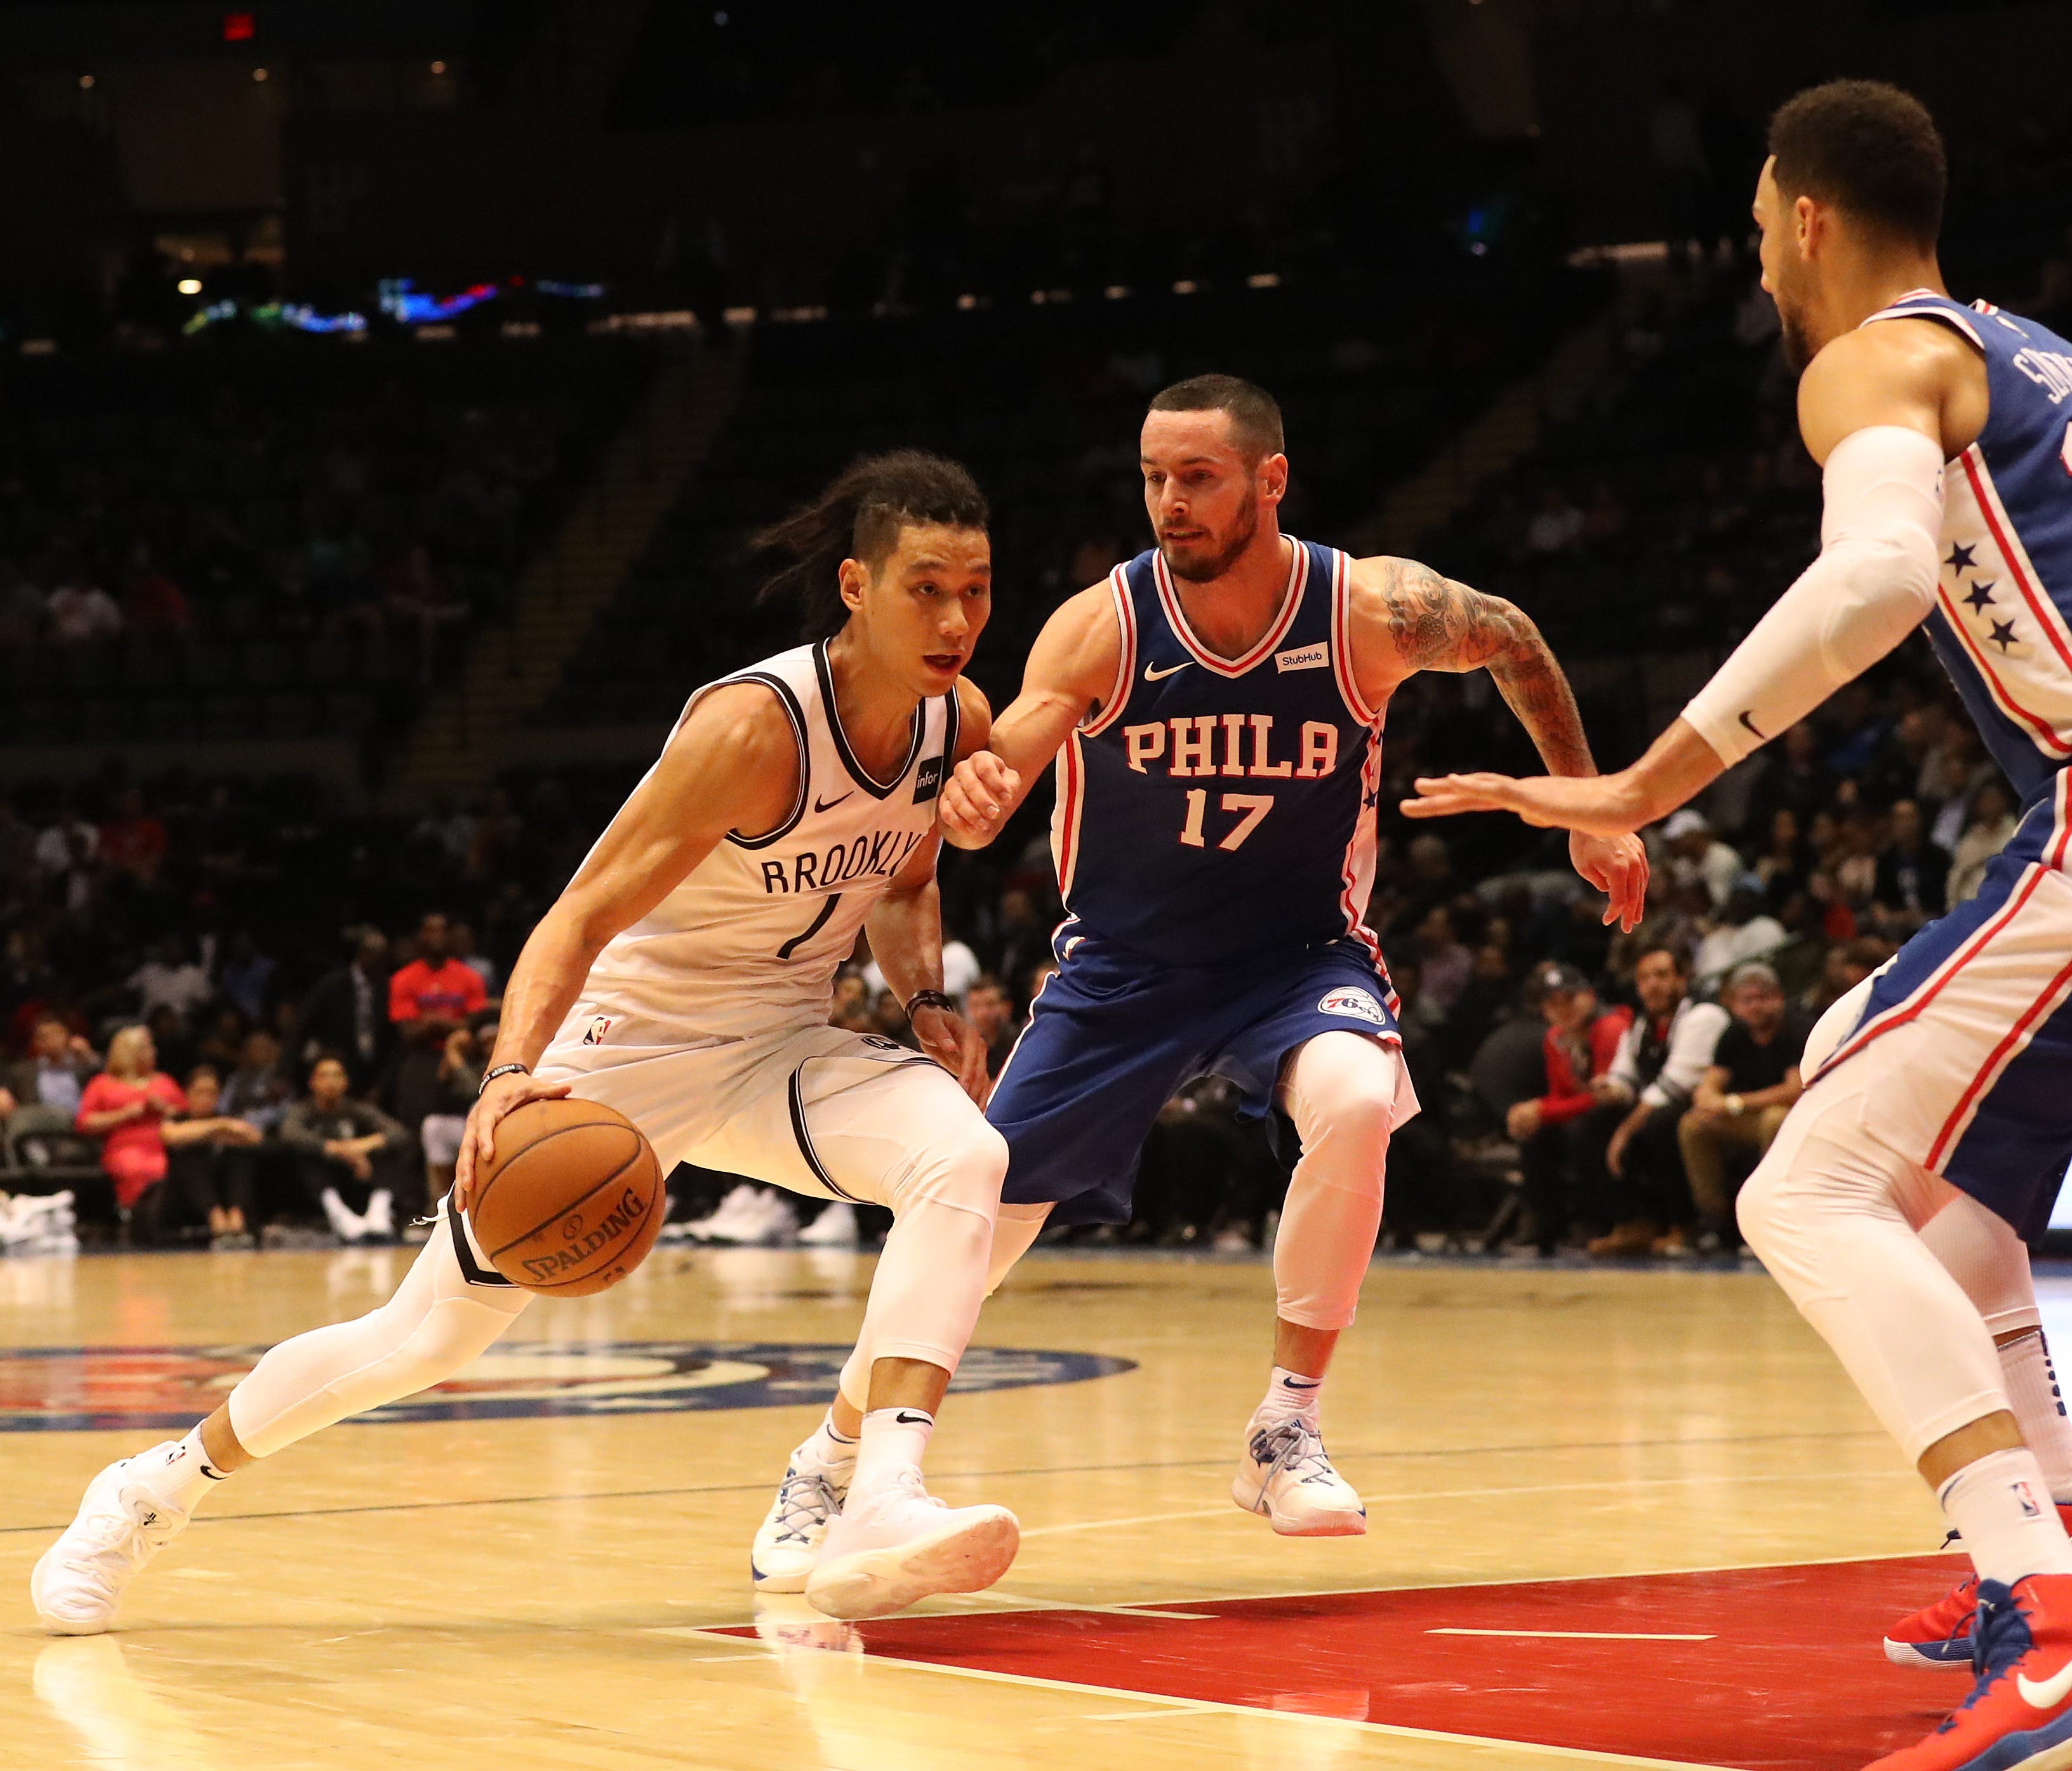 Brooklyn Nets guard Jeremy Lin (7) dribbles the ball as Philadelphia 76ers guard JJ Redick (17) defends during the third quarter at Nassau Veterans Memorial Coliseum.